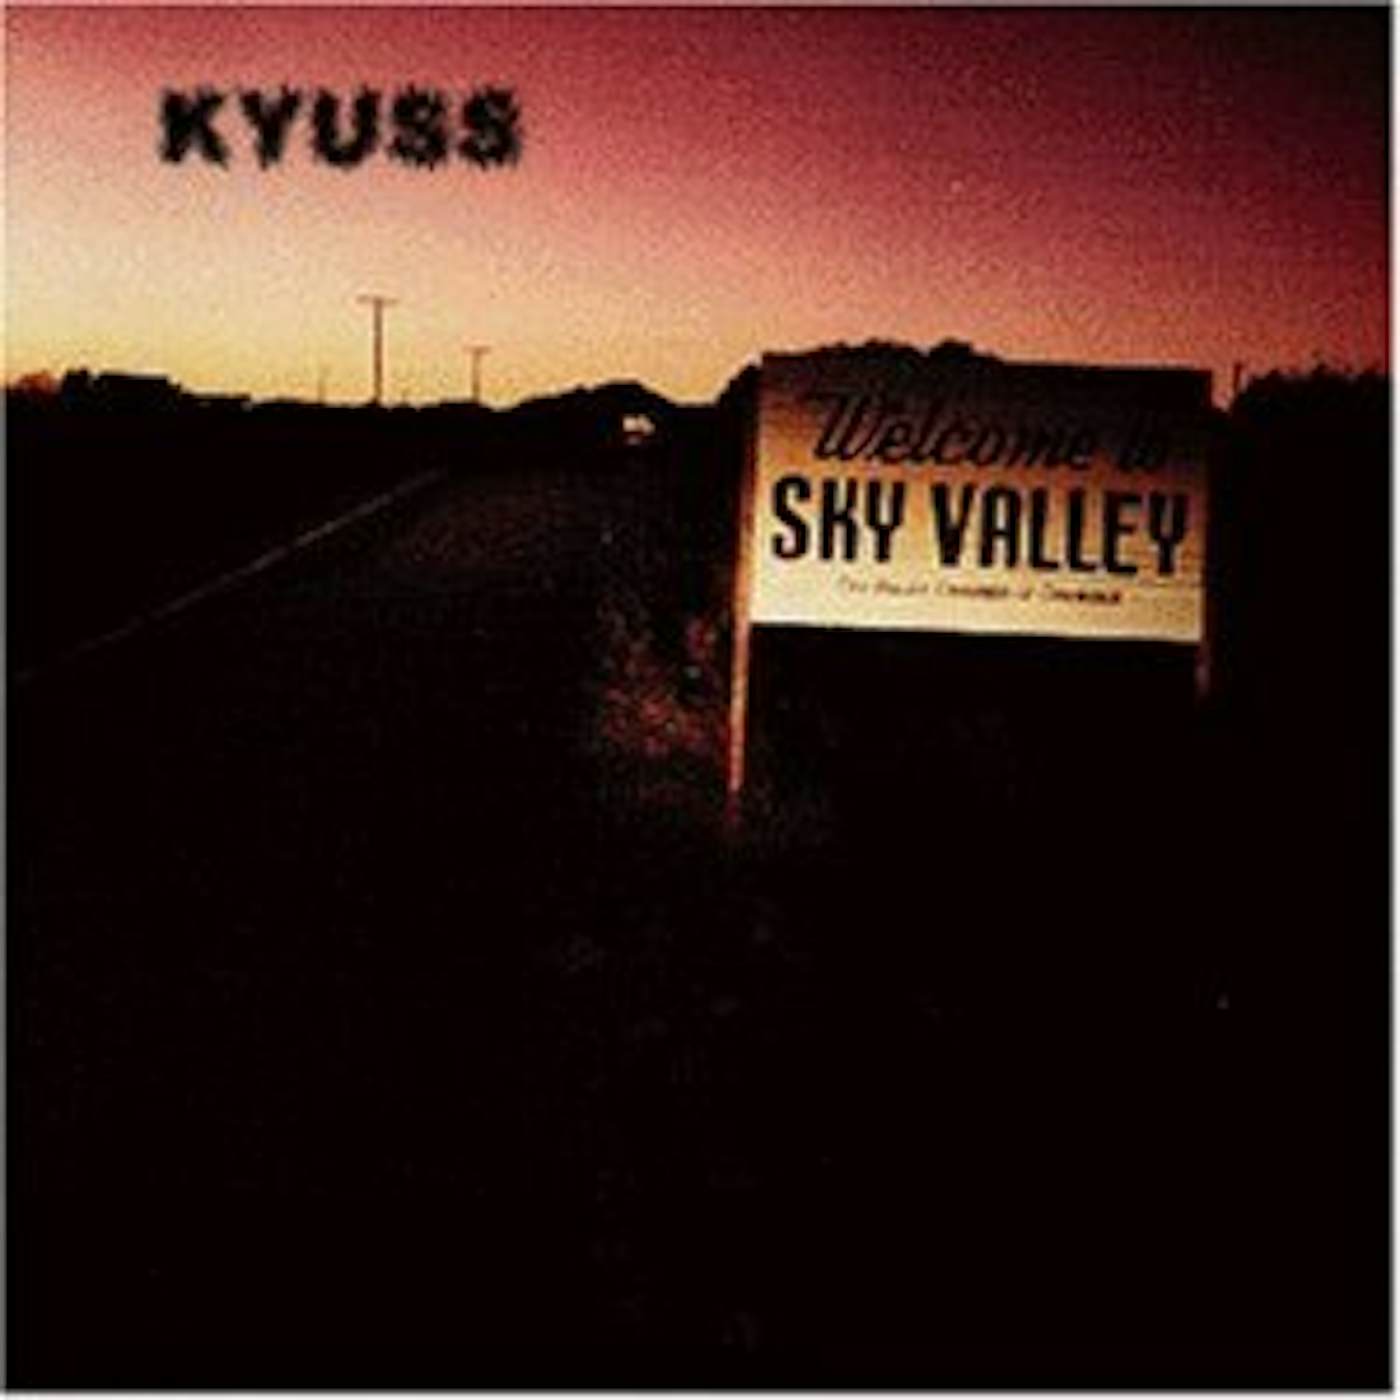 Kyuss WELCOME TO SKY VALLEY Vinyl Record - 180 Gram Pressing